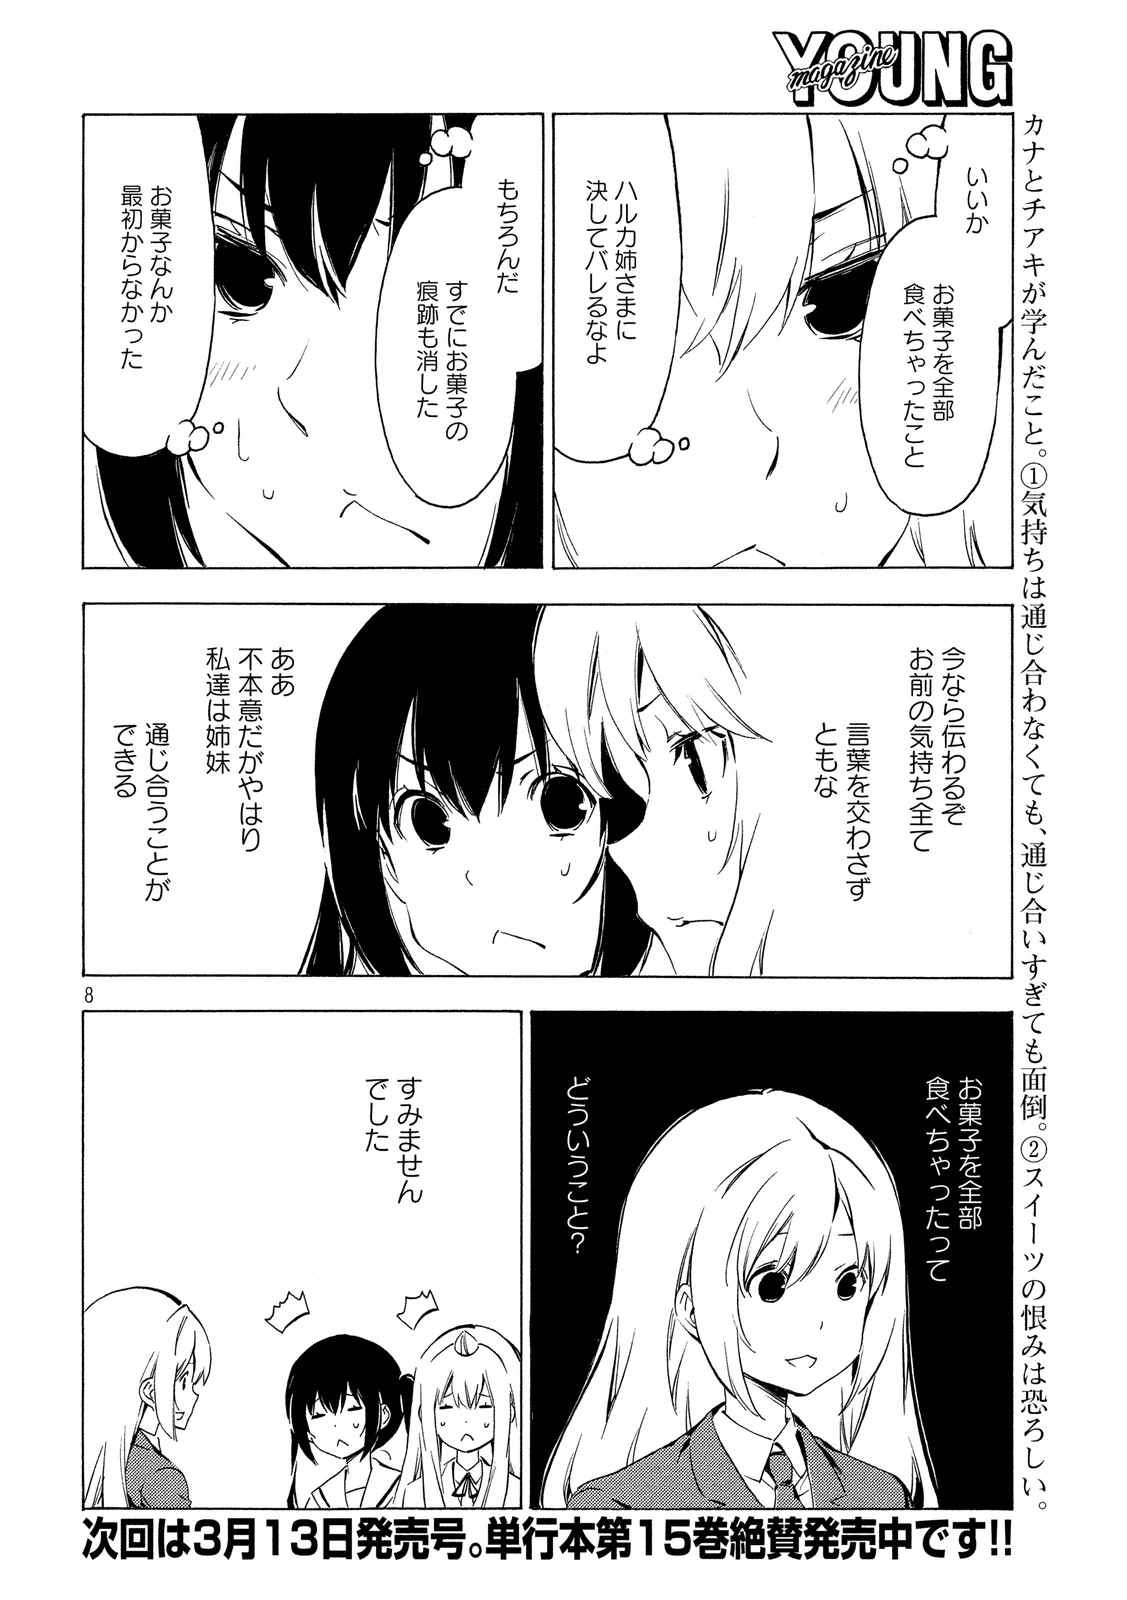 Minami-ke - Chapter 311 - Page 8